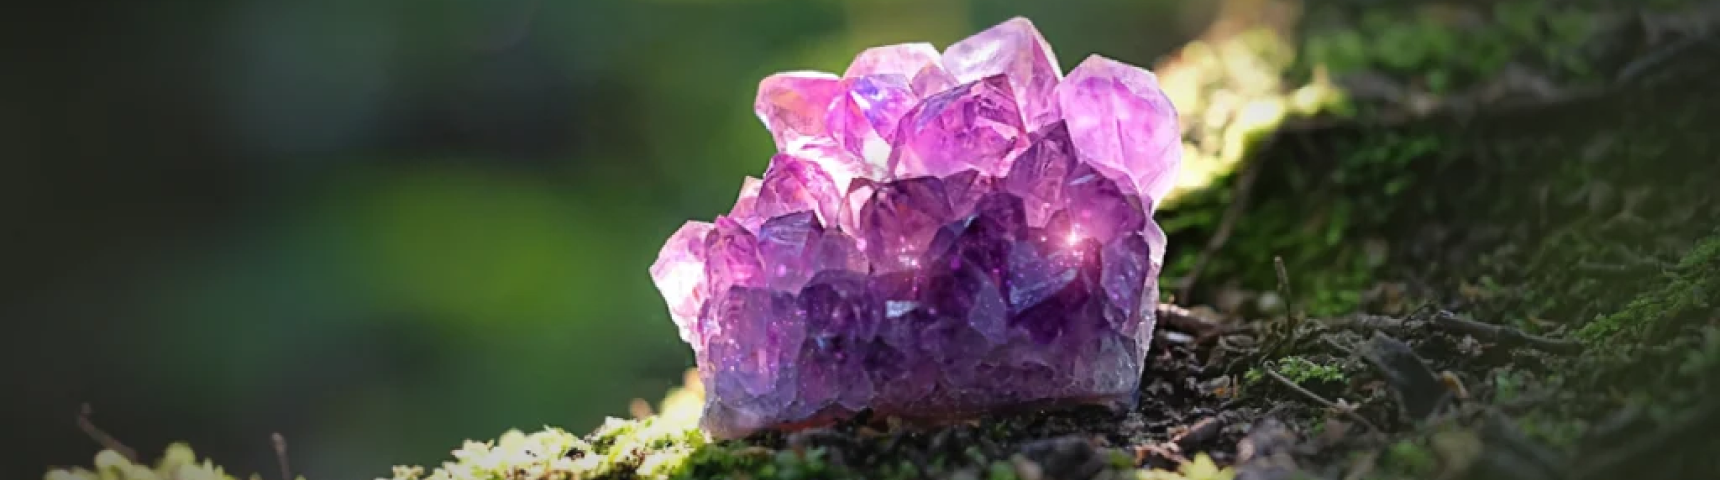 404 Not Found | Crystals, Amethyst crystal meaning, Amethyst